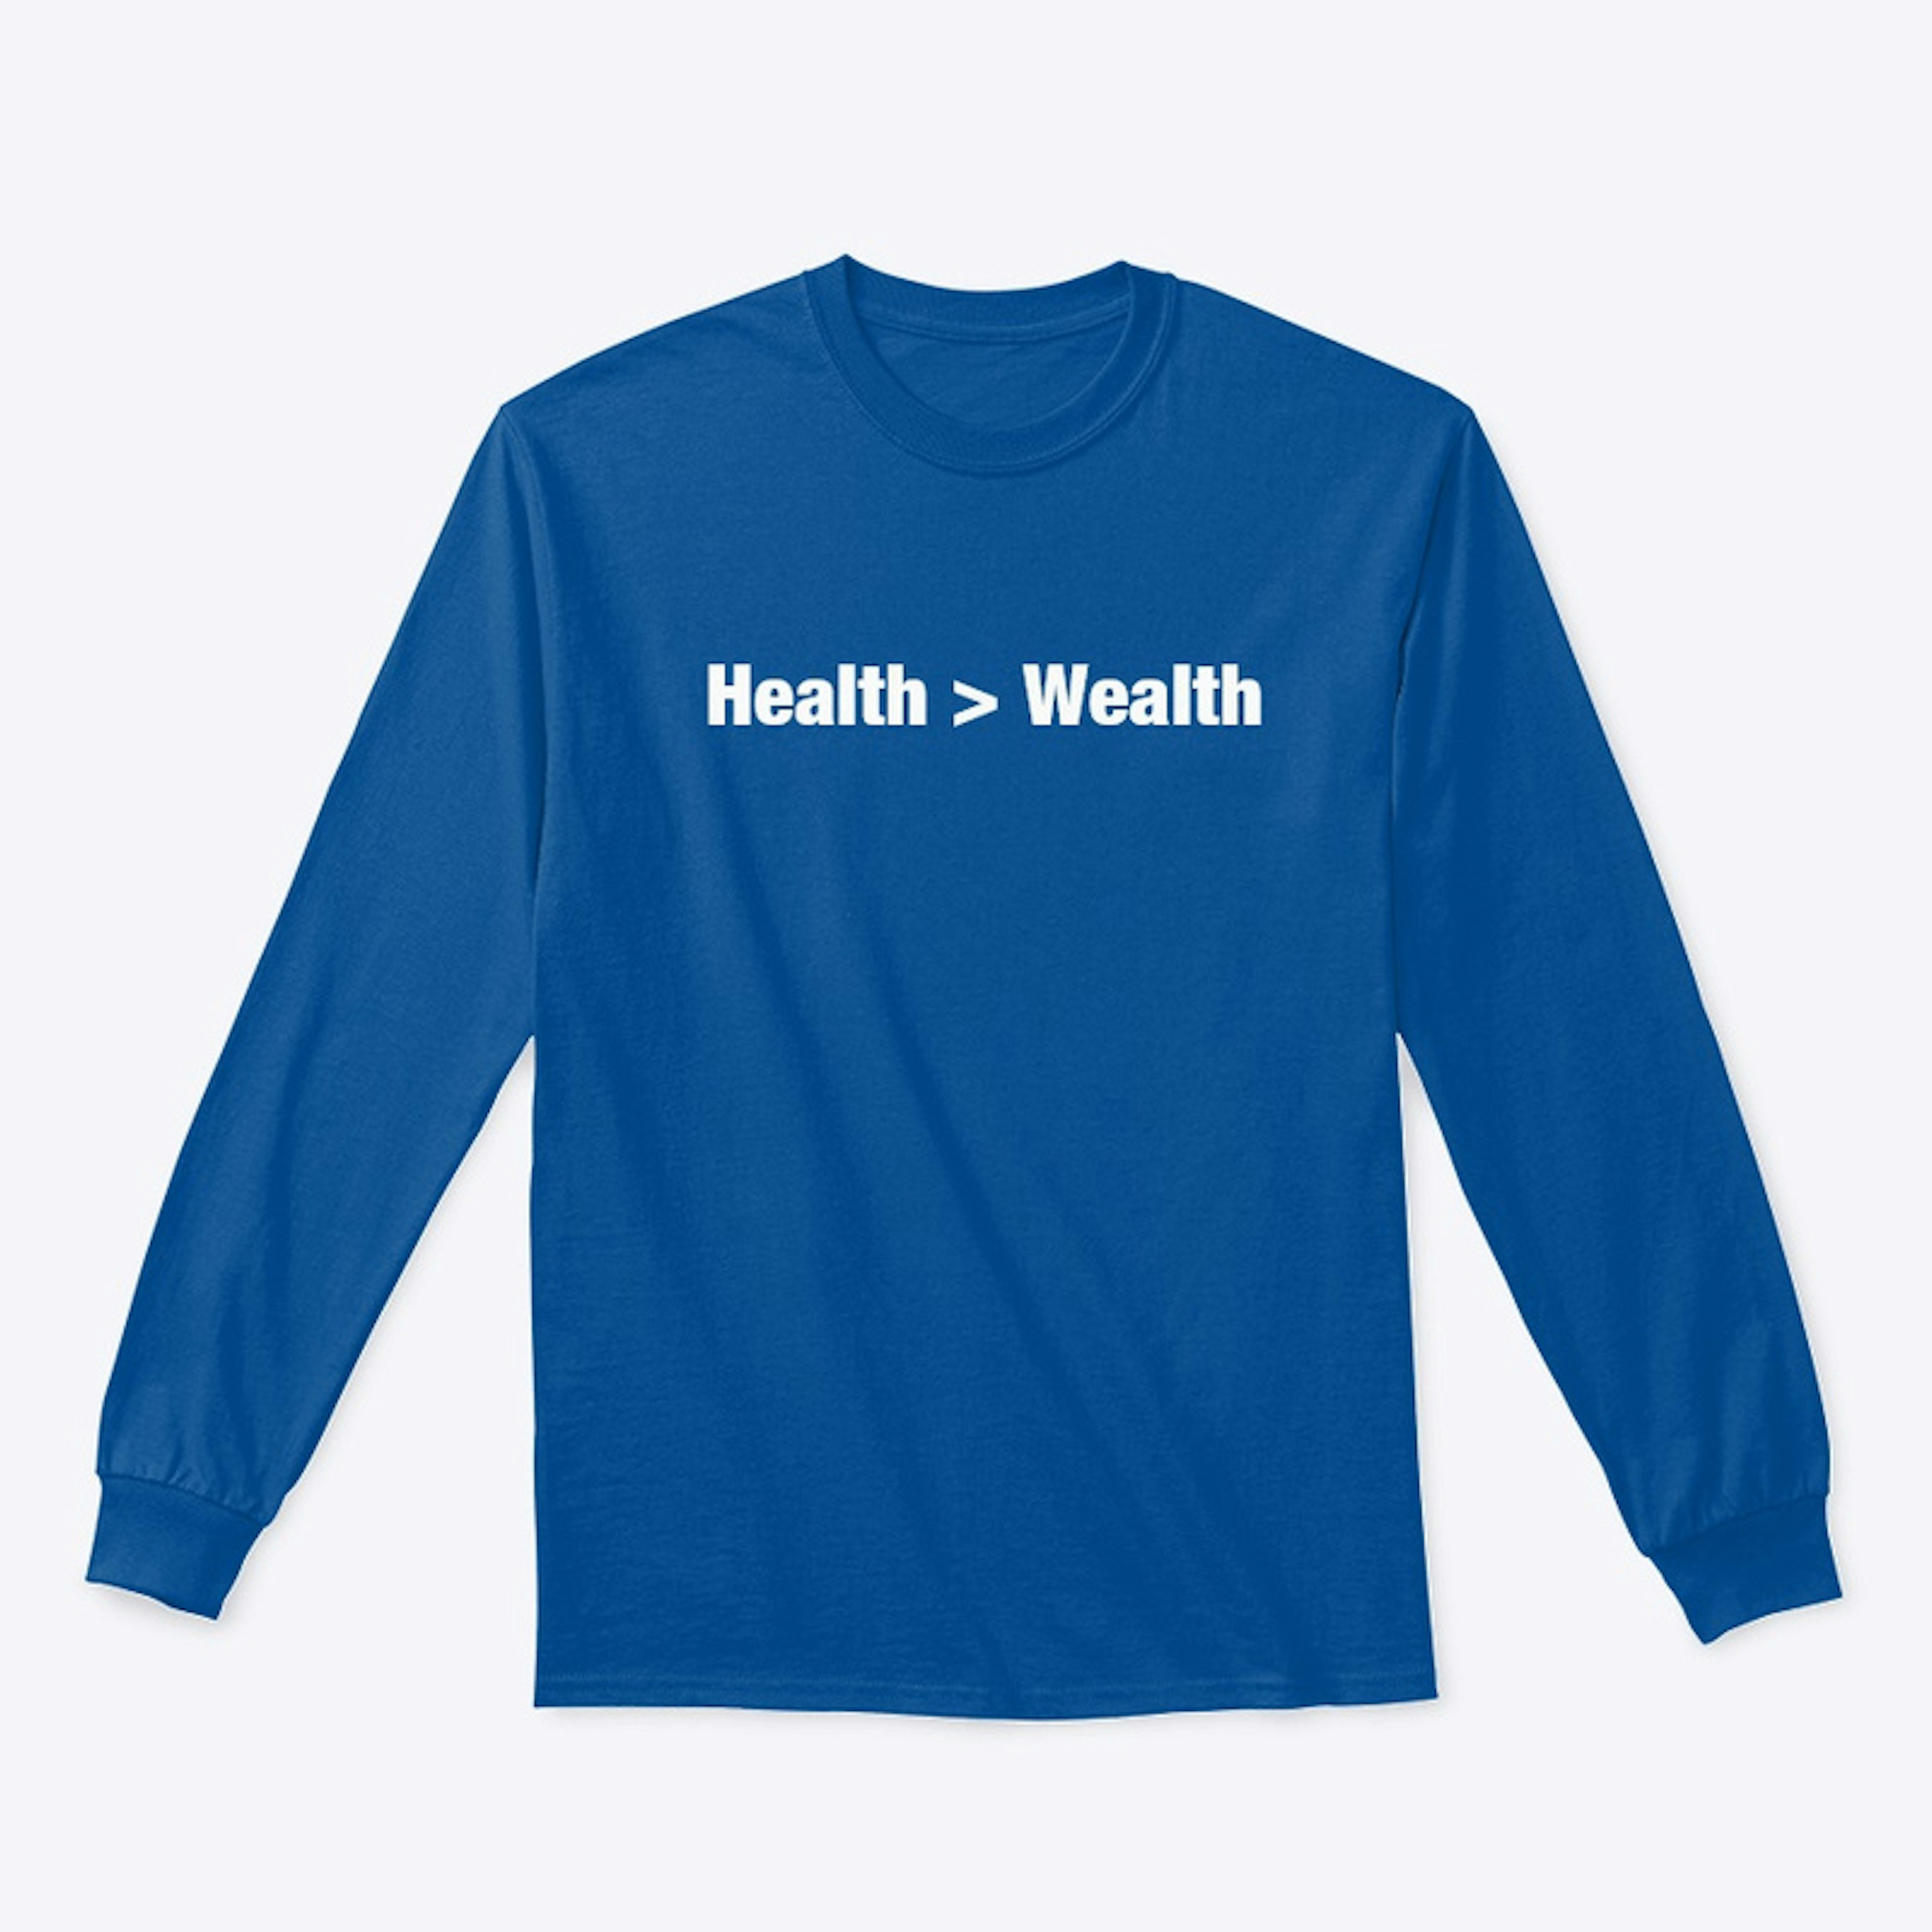 Health > Wealth Apparel